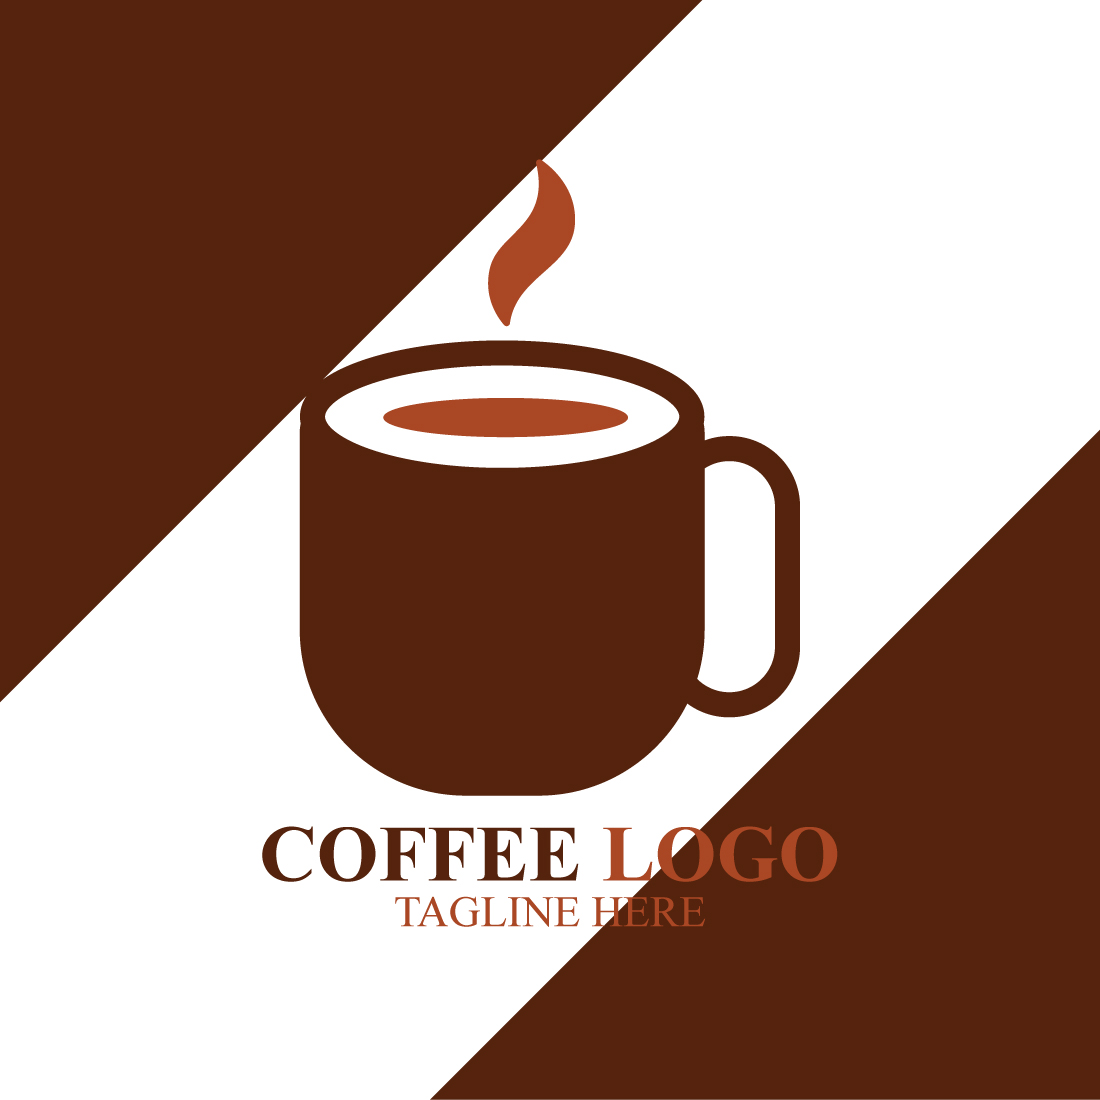 Professional Coffee logo & Coffee Shop logo design preview image.